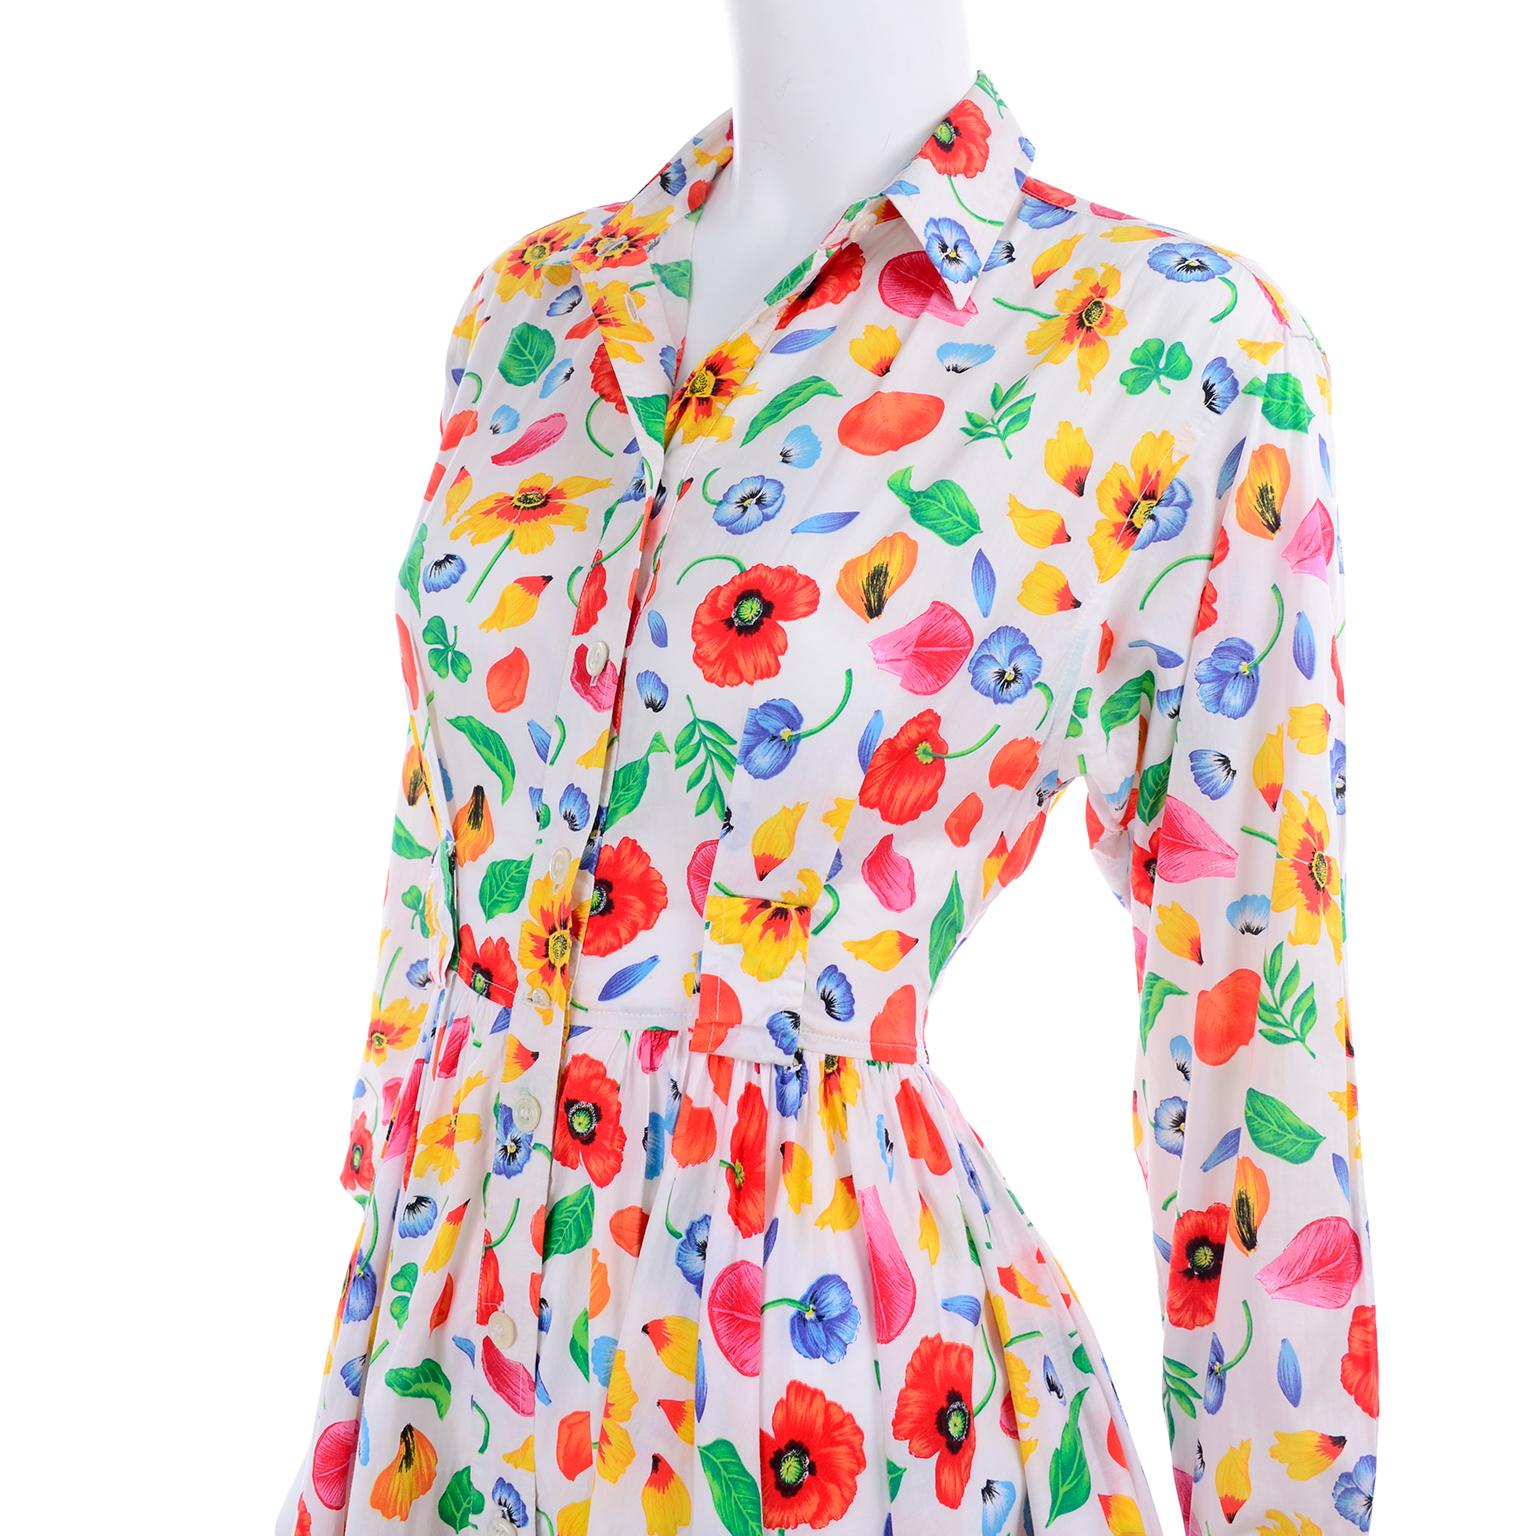 Women's 1990s Vintage Kenzo Poppy Floral Print Cotton Shirtwaist Dress With Full Skirt